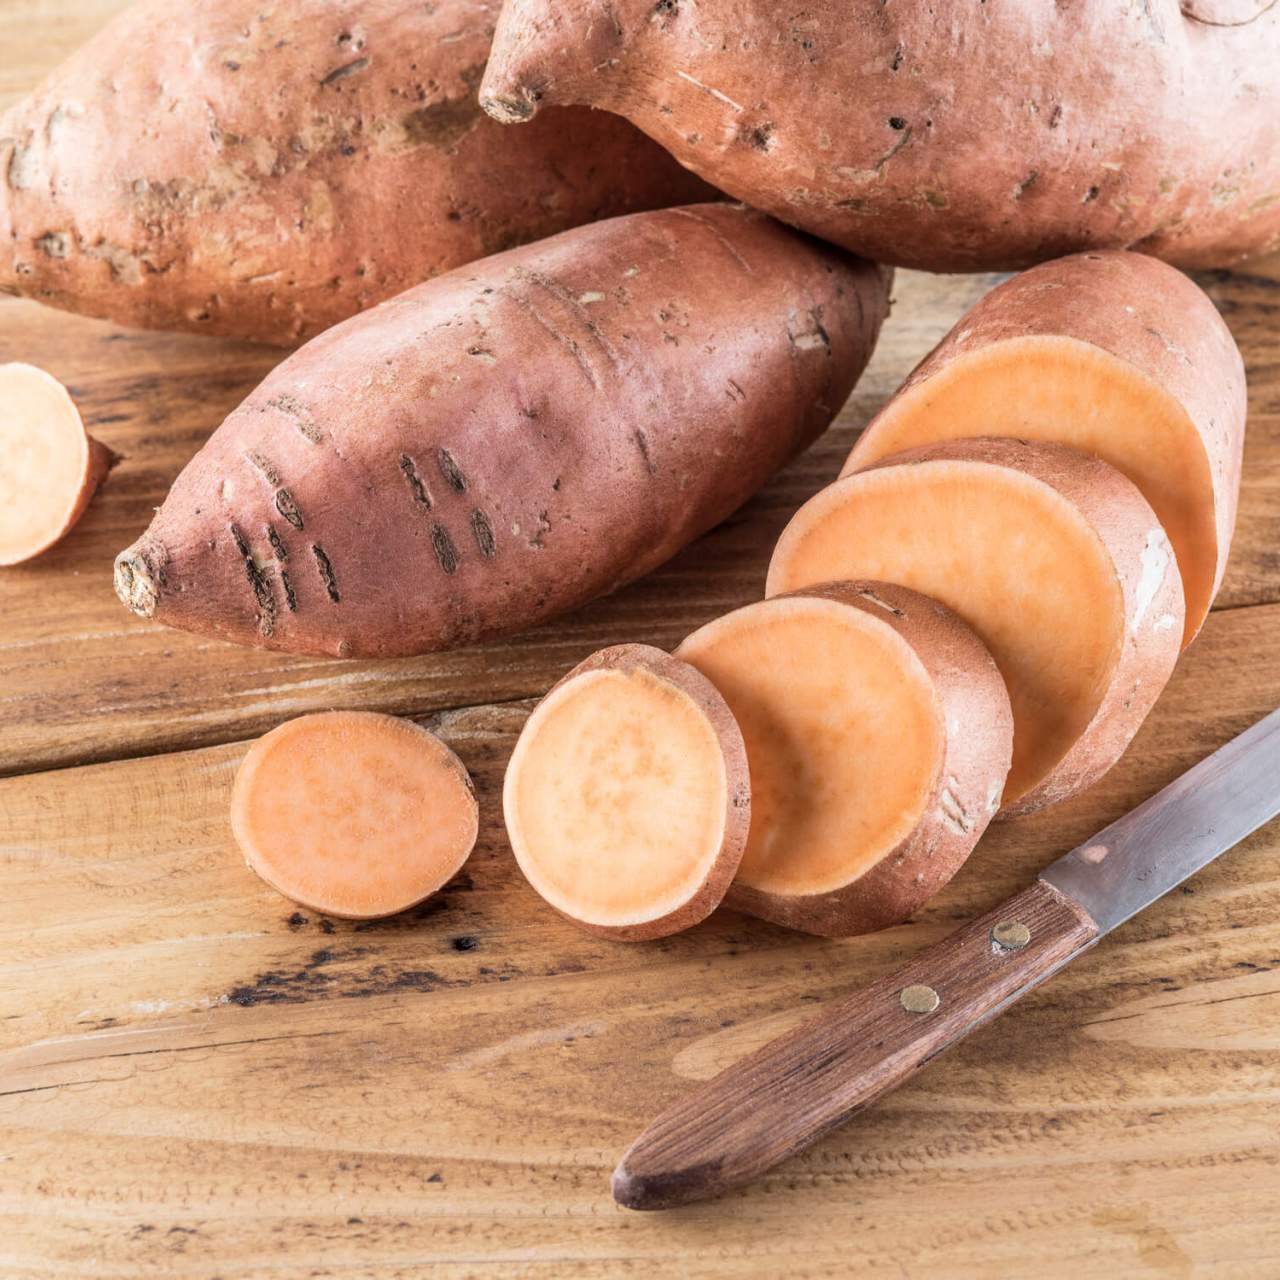 8 Reasons To Eat More Sweet Potatoes Slender Kitchen,Vinegar Based Bbq Sauce Recipe For Pulled Pork